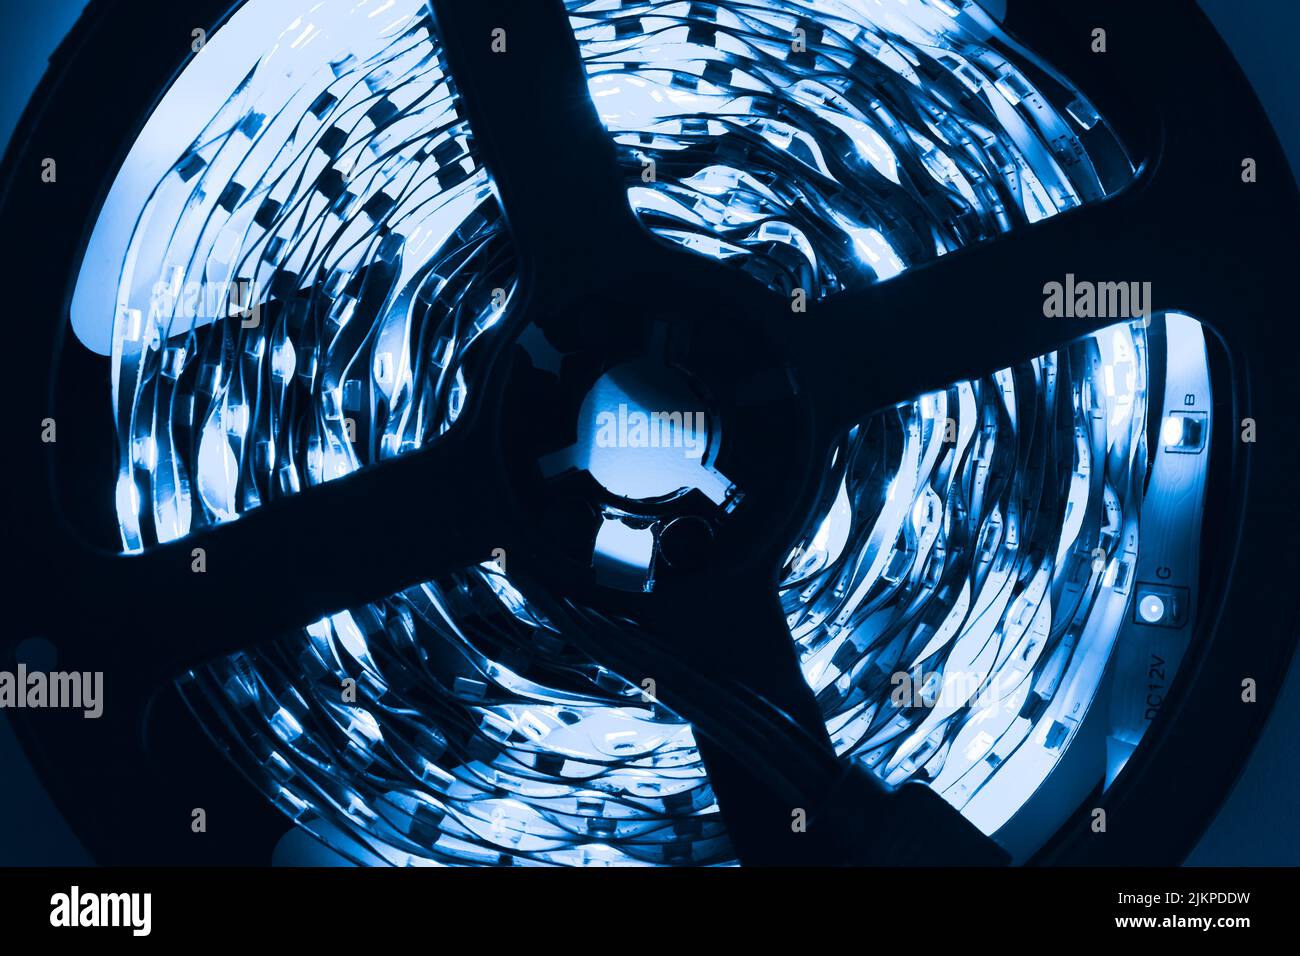 Tira de LED enrollada con luces azules que brillan en la oscuridad, foto de primer plano con enfoque selectivo Foto de stock